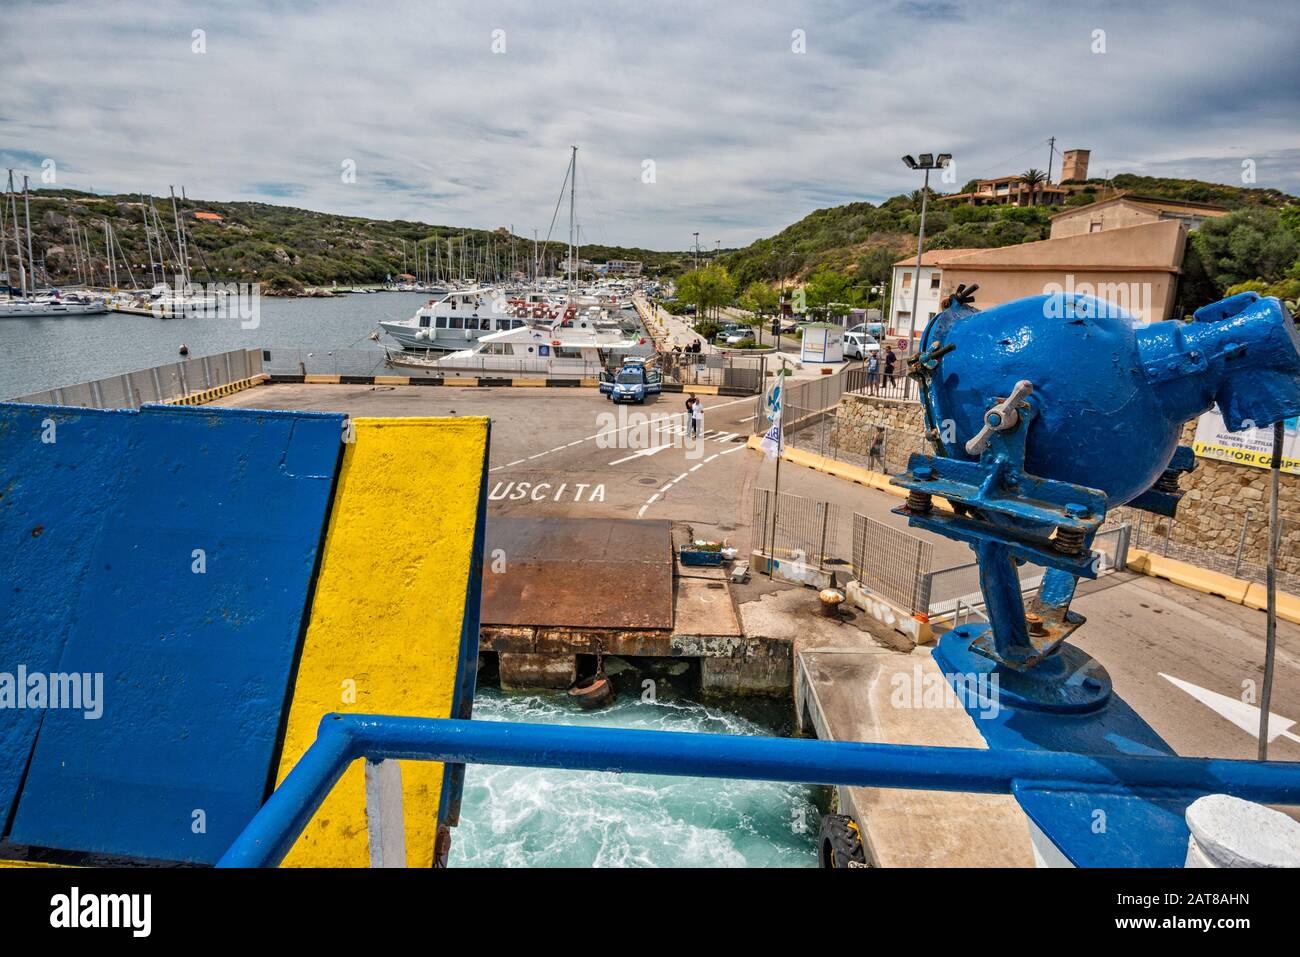 MS Ichnusa, BluNavy ferry lowering ramp after arriving at terminal in Santa Teresa di Gallura, Sassari, Sardinia, Italy Stock Photo